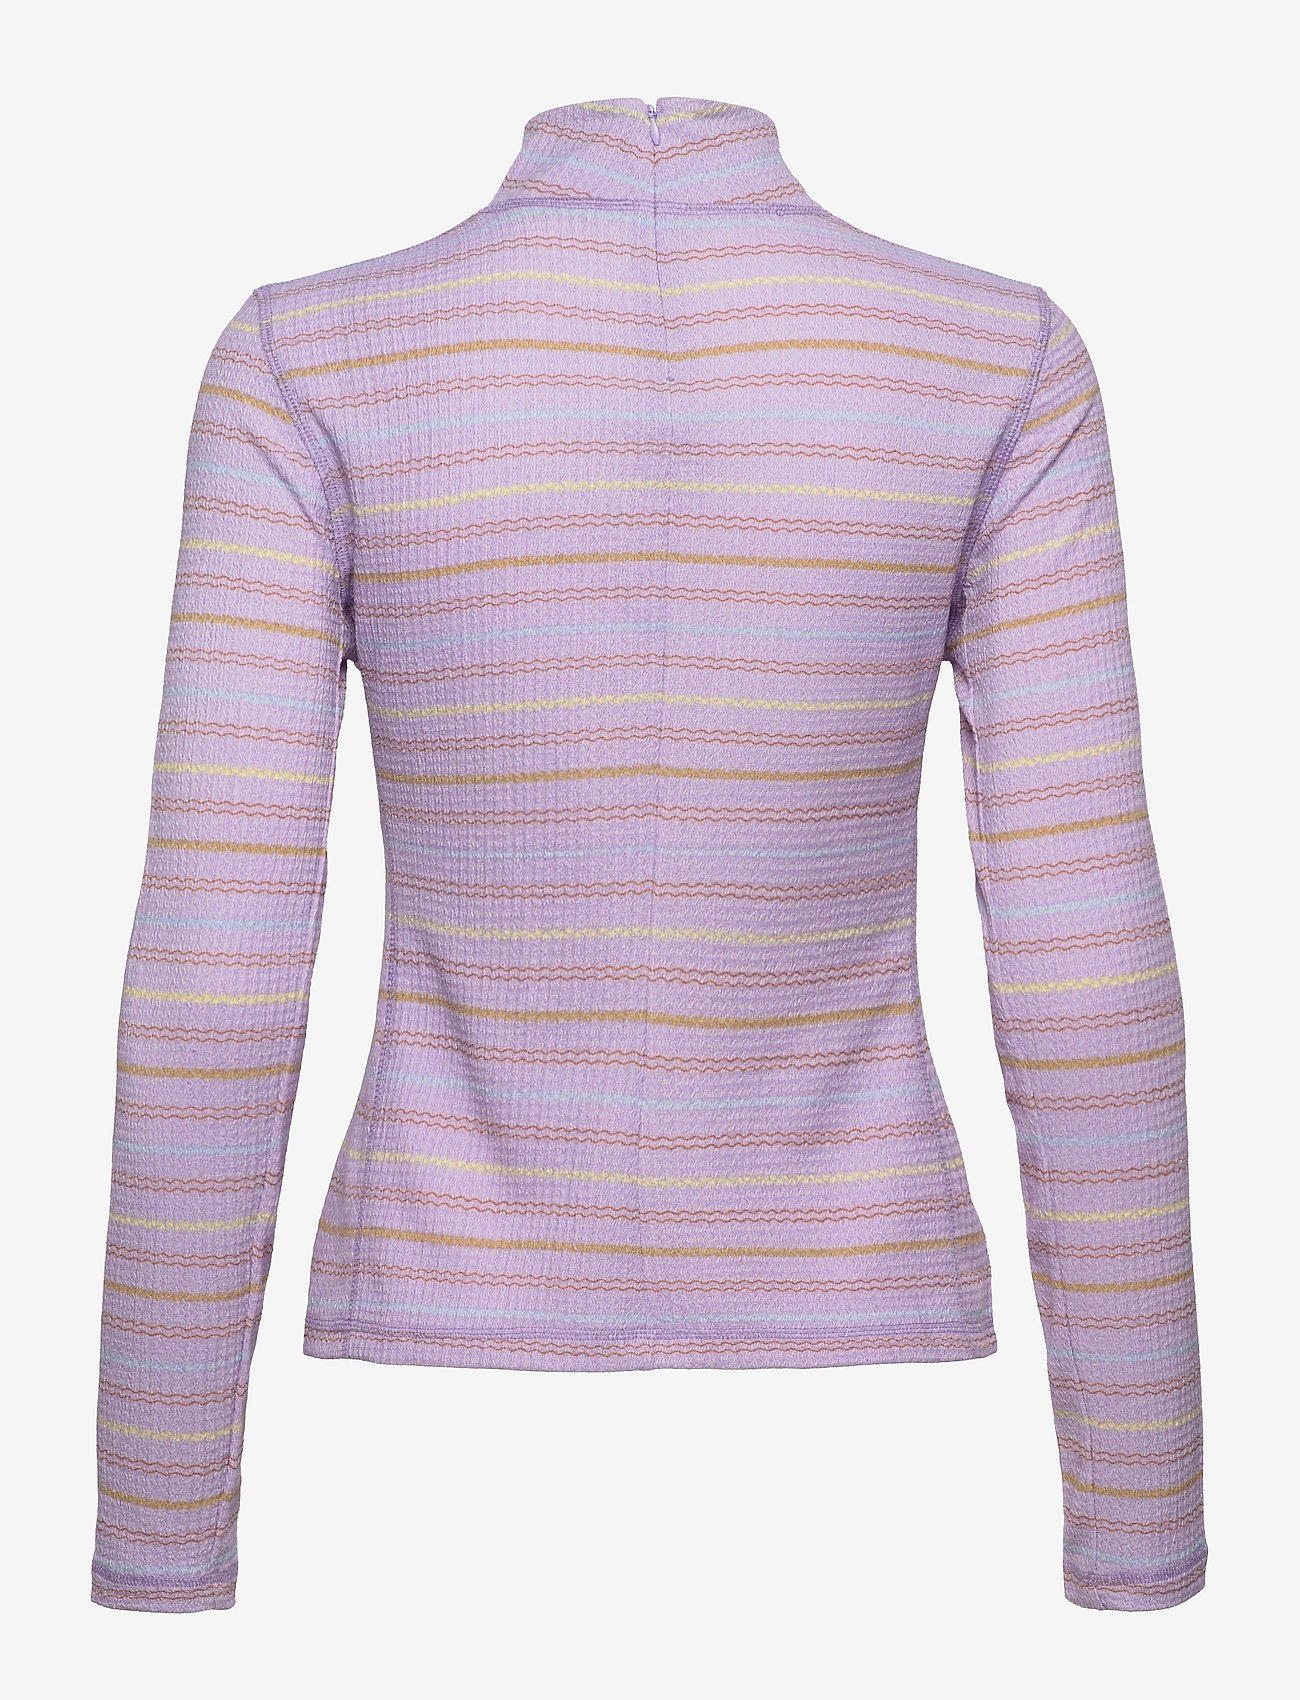 STINE GOYA - Ari, 1296 Soft Rib Jersey - t-shirts & tops - ballet stripe - 2